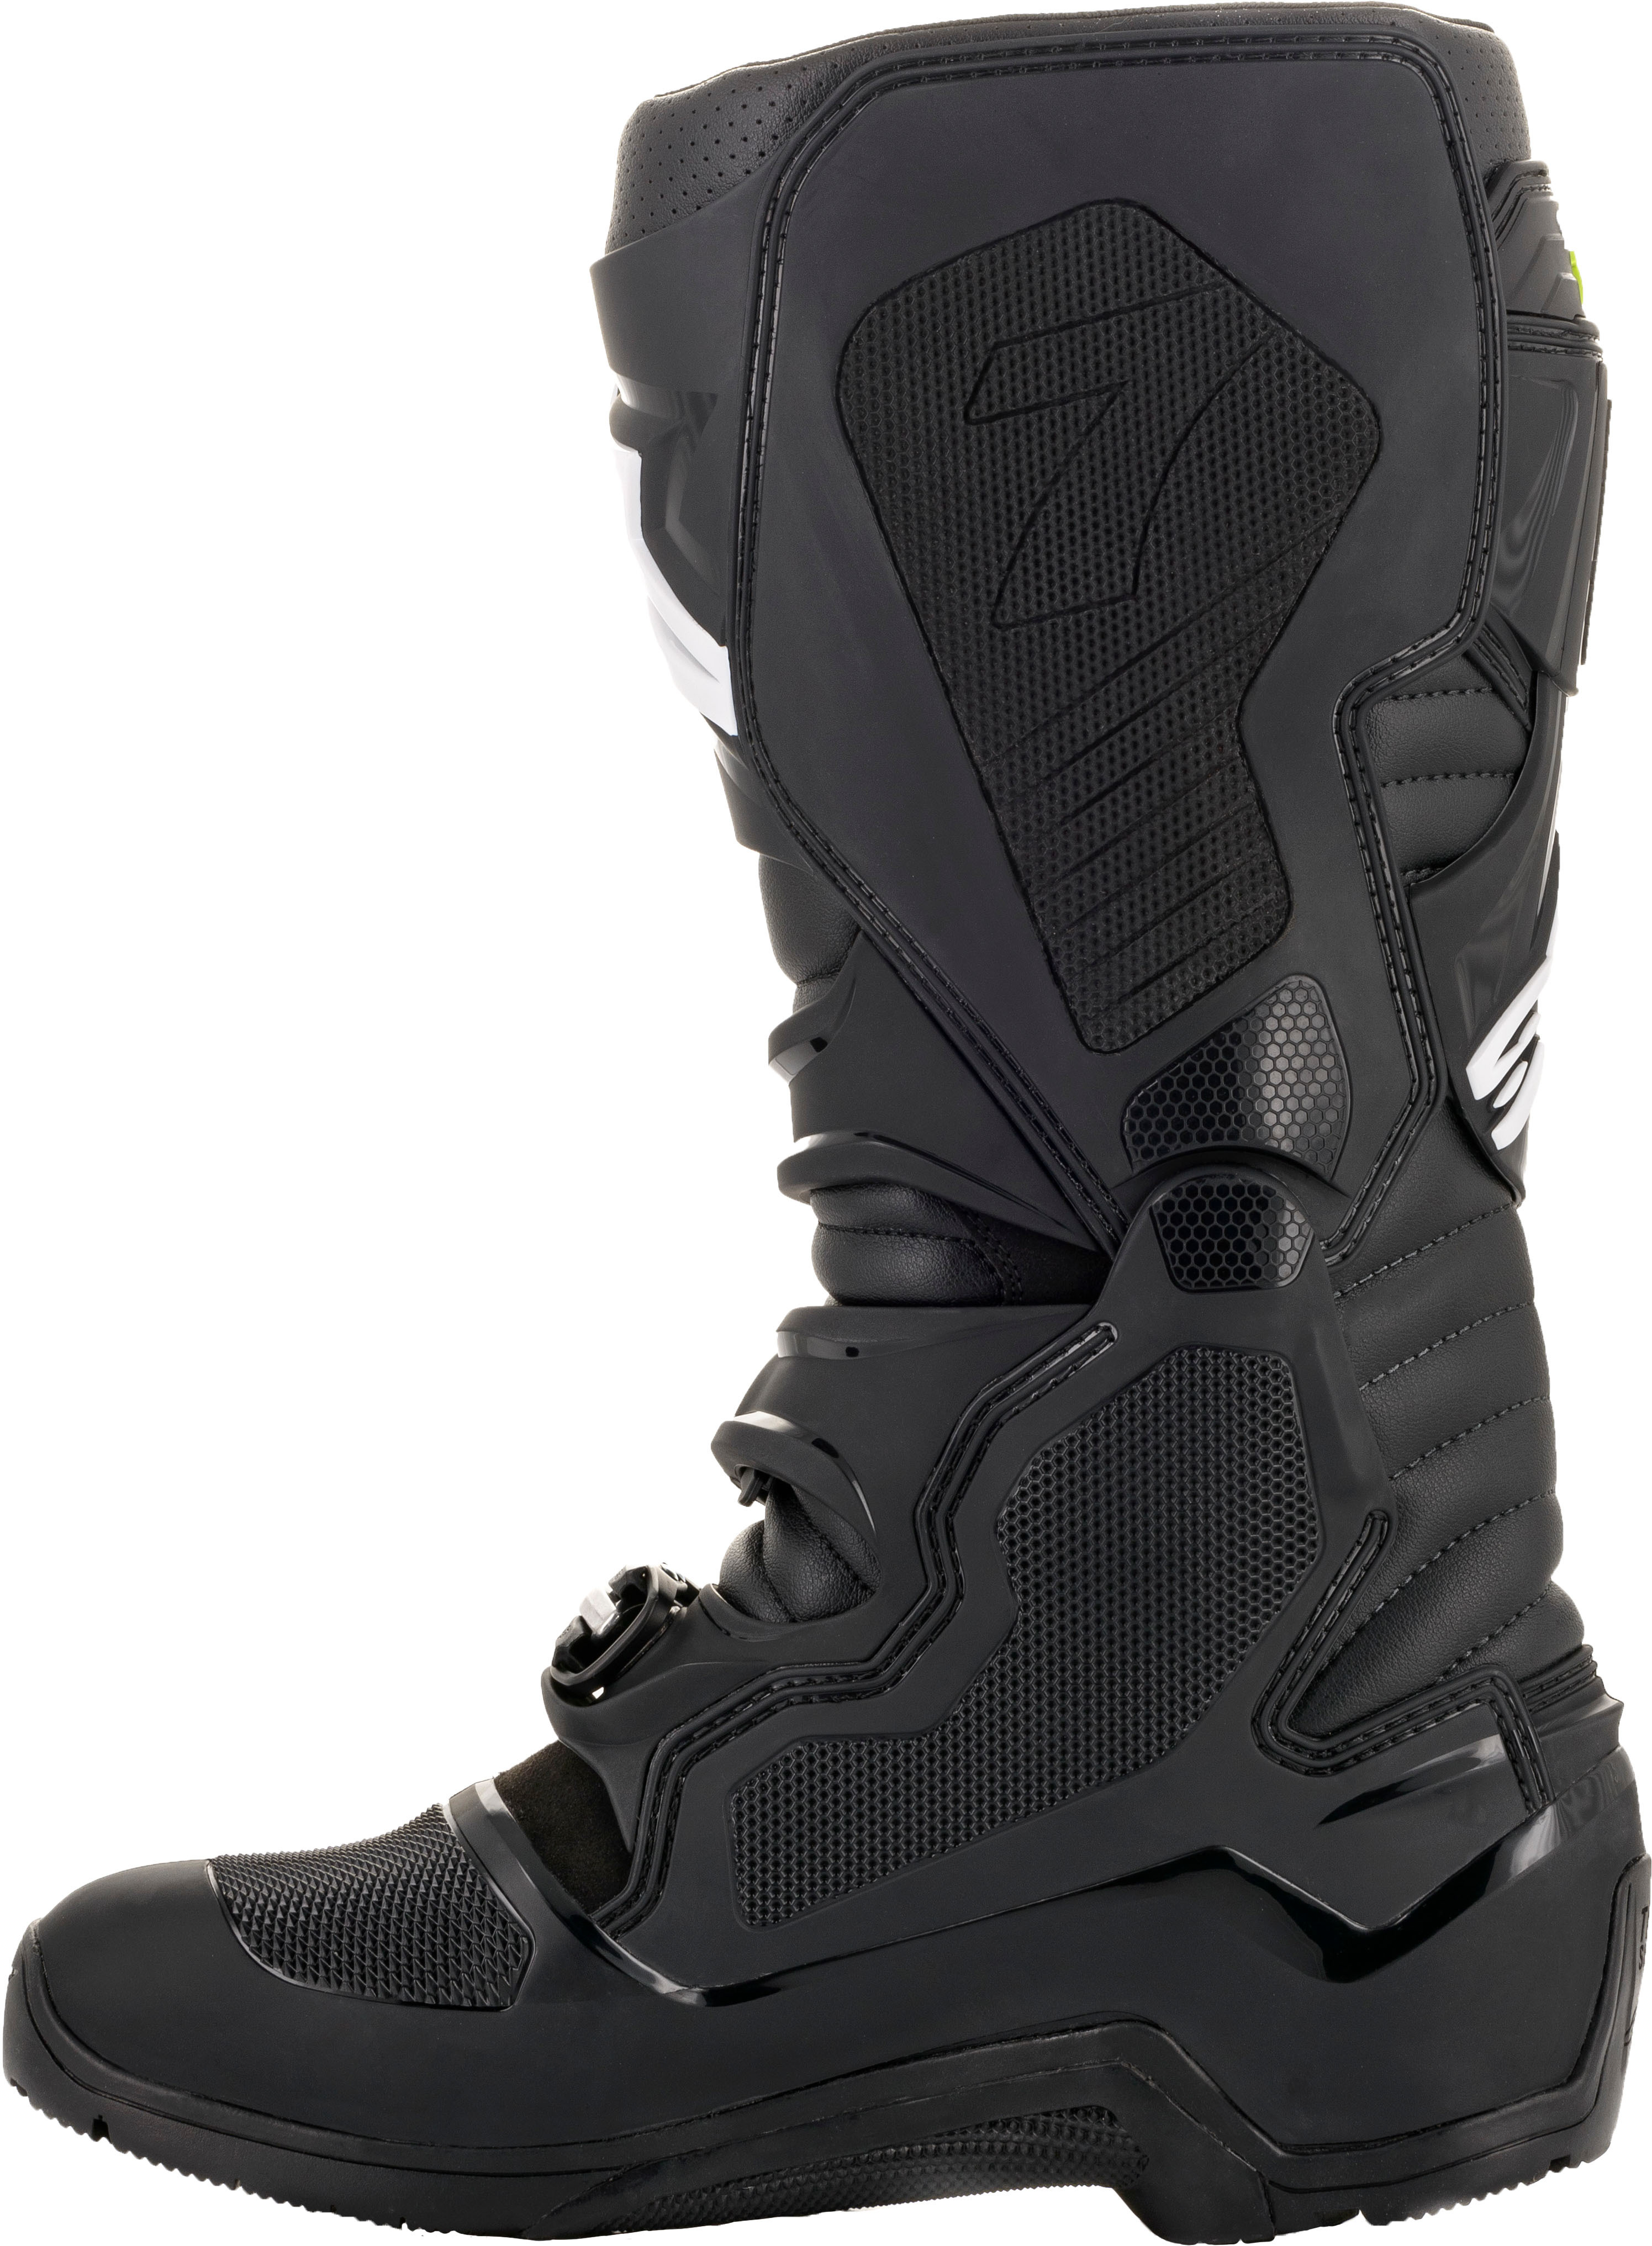 Tech 7 Enduro Drystar Boots Black/Grey US 08 - Click Image to Close